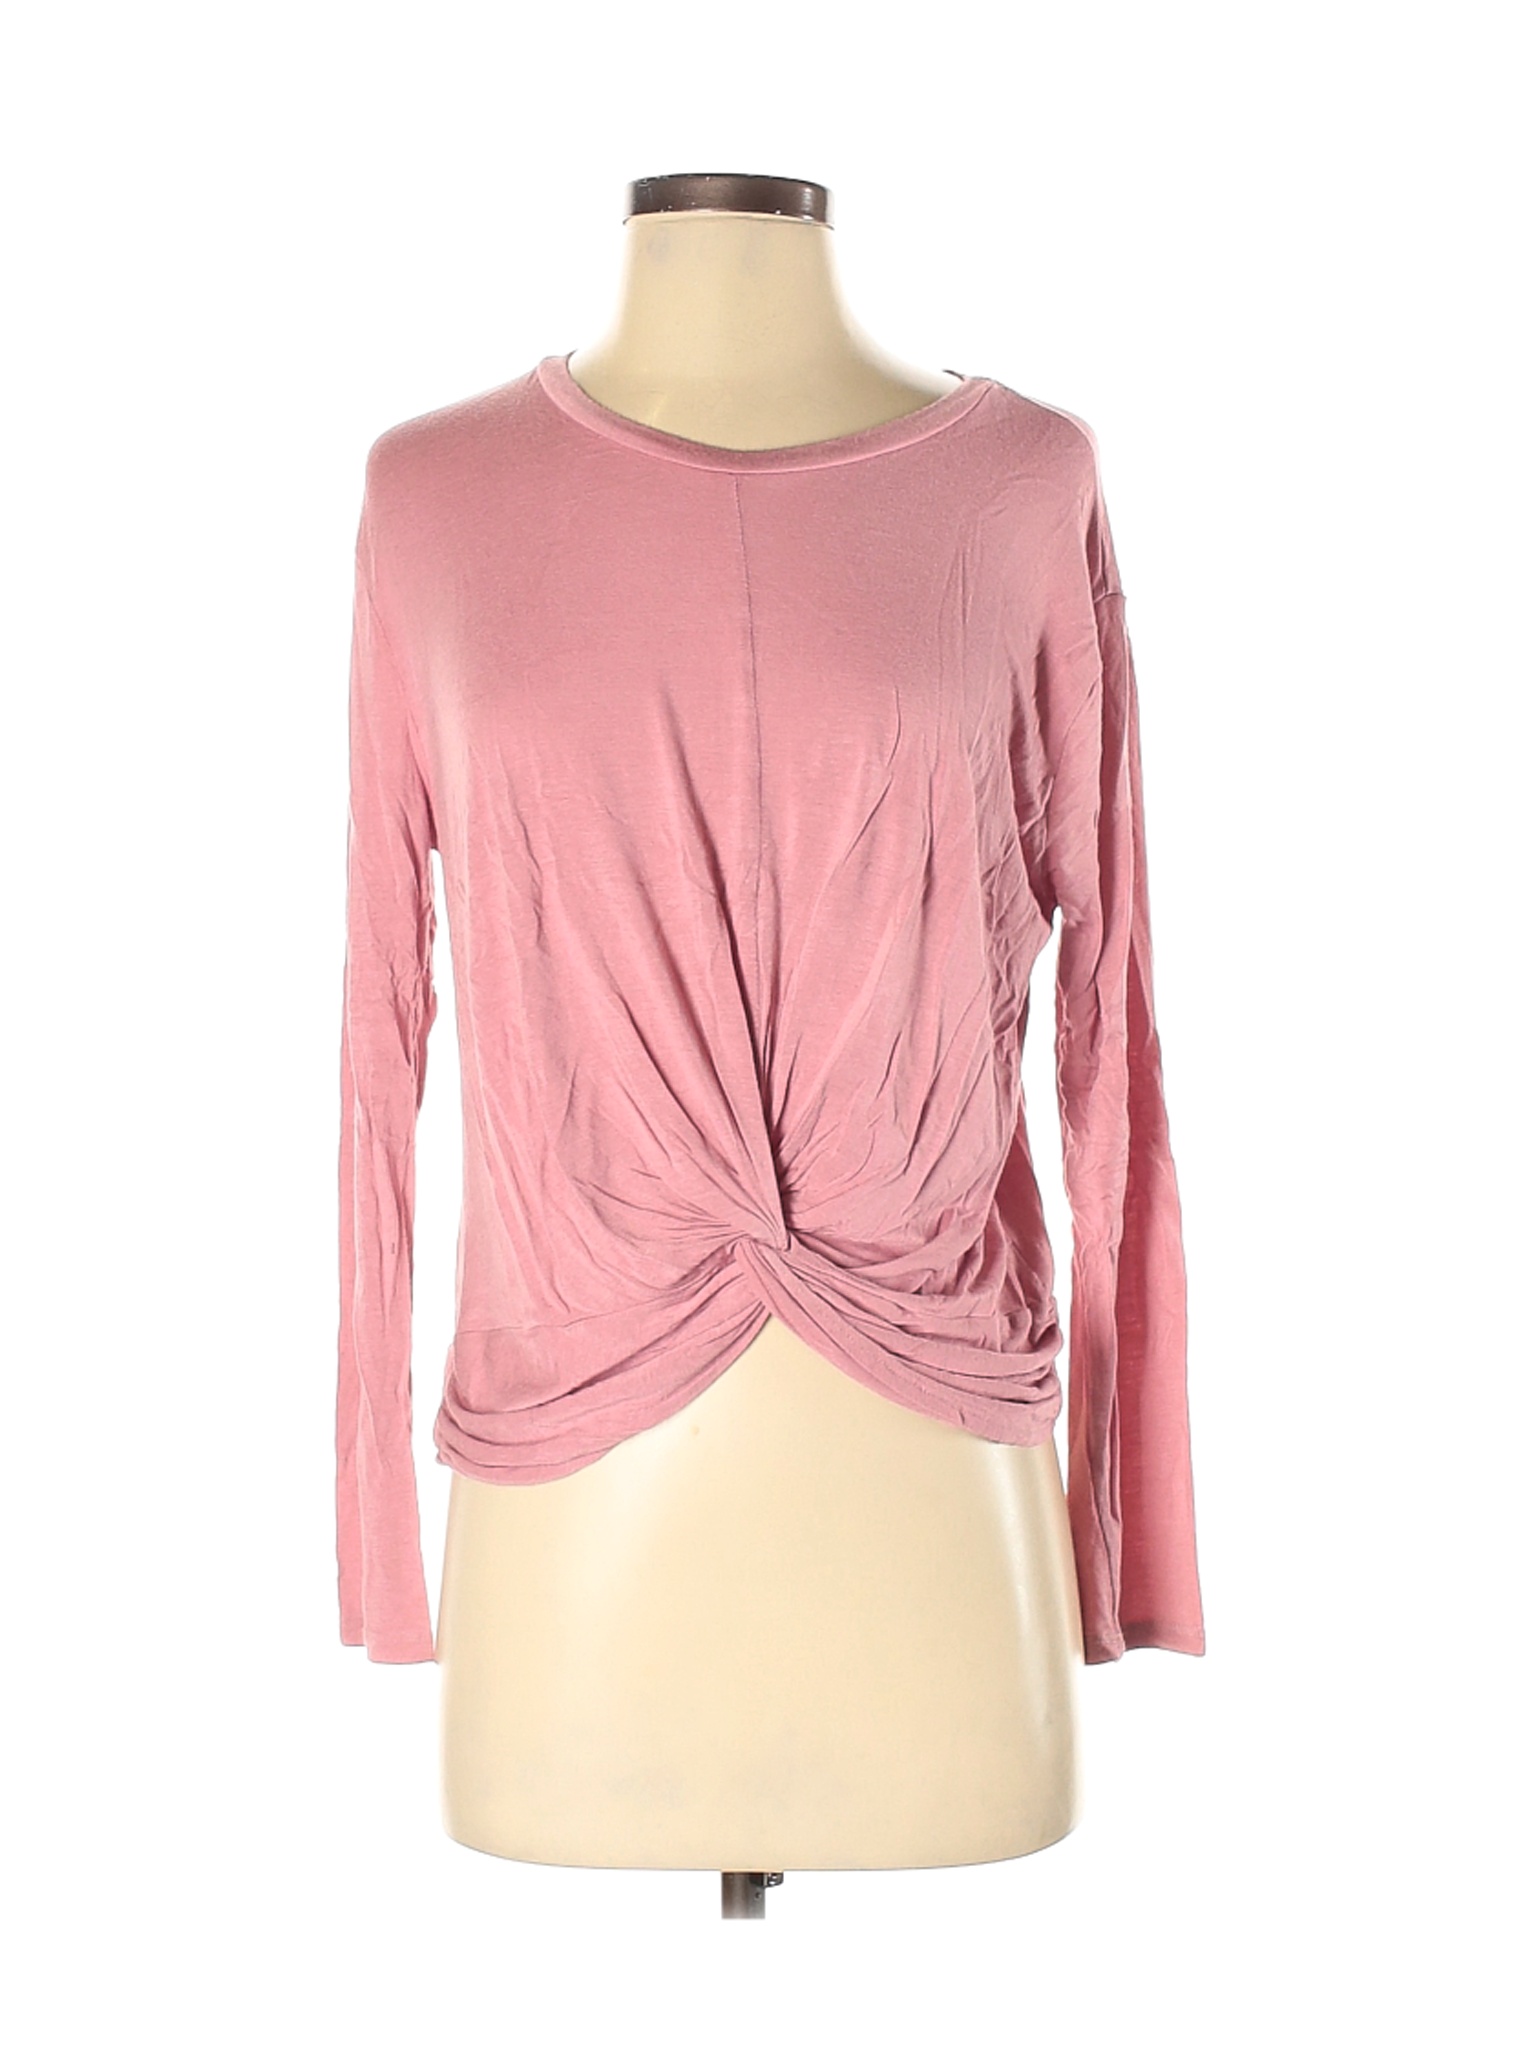 True Craft Women Pink Long Sleeve Top S | eBay